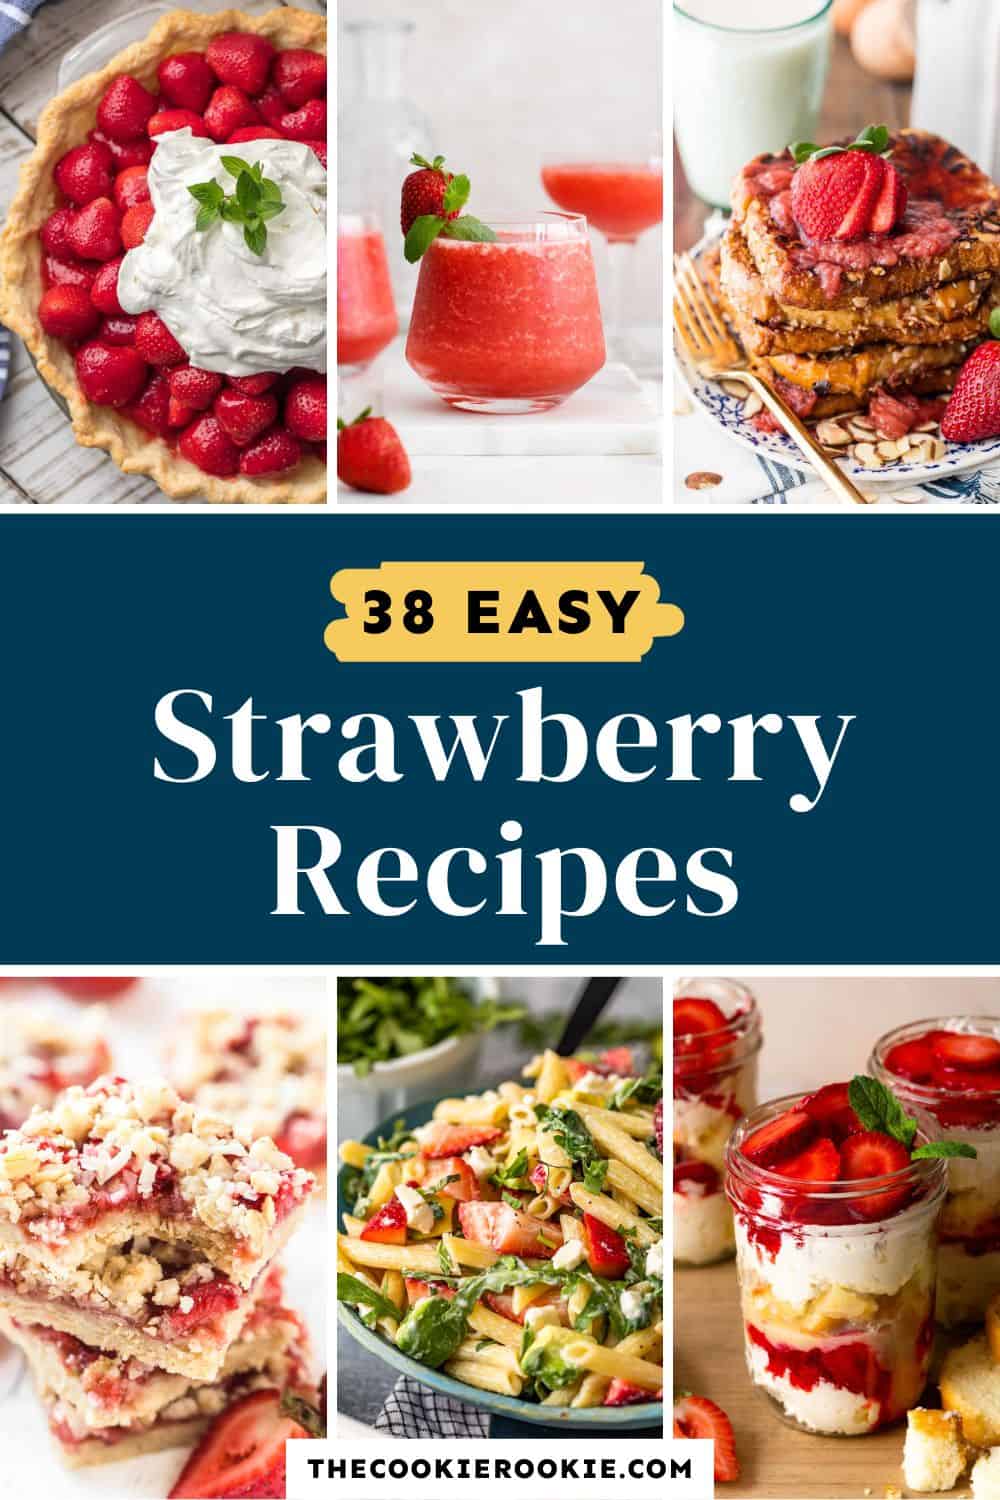 38 easy strawberry recipes Pinterest